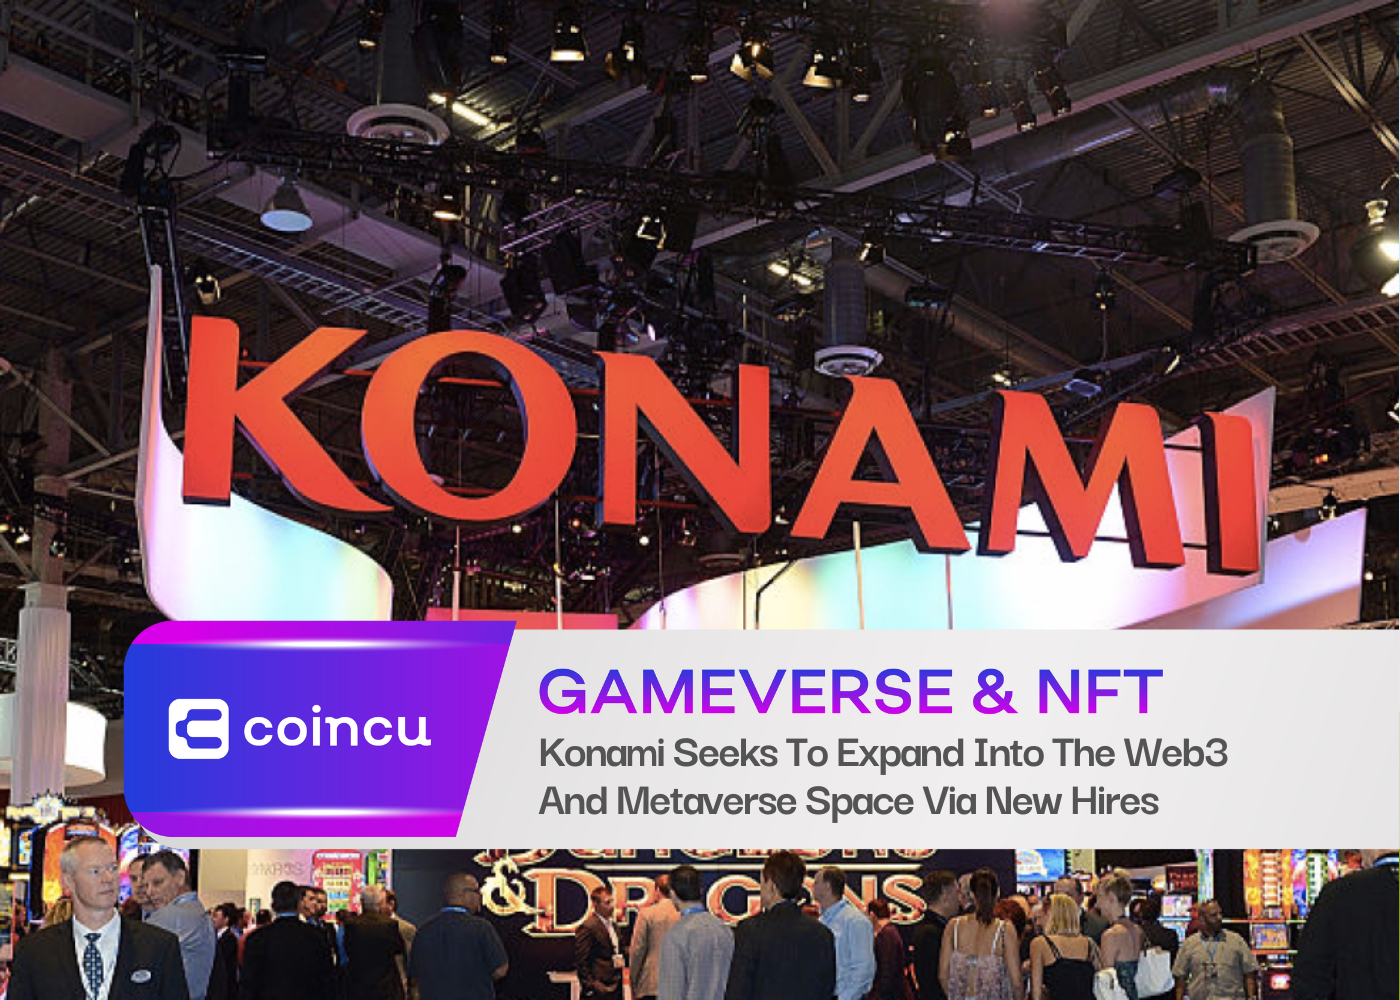 Konami Seeks To Expand Into The Web3 And Metaverse Space Via New Hires